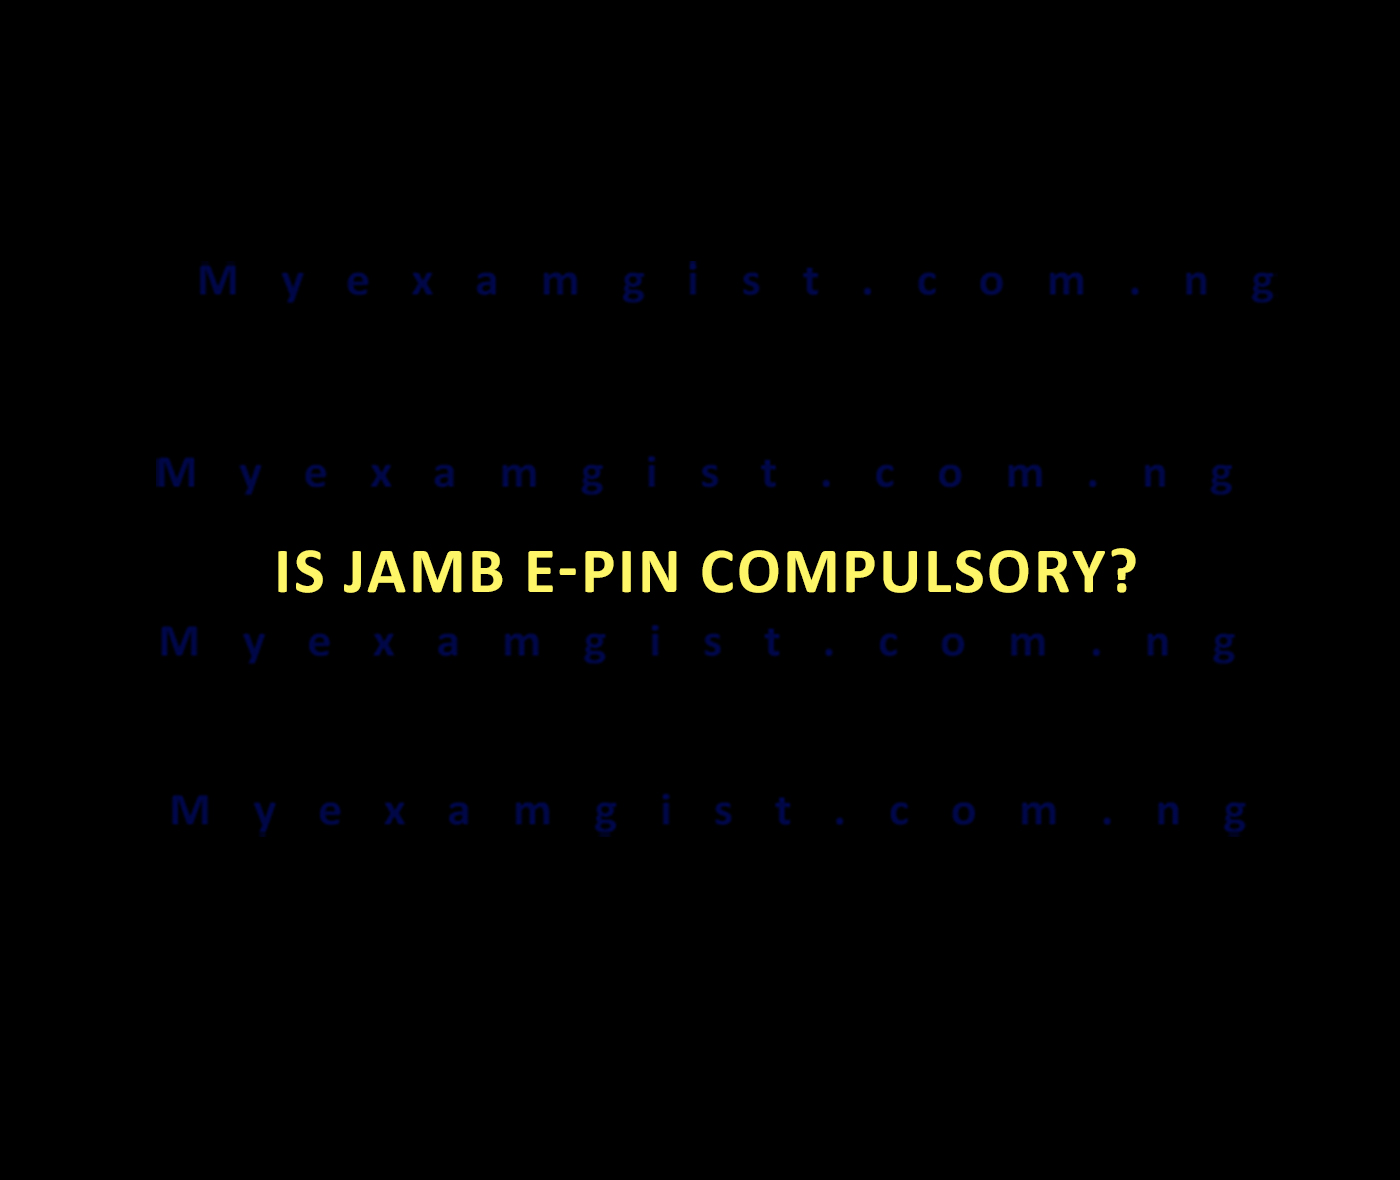 Is JAMB e-PIN compulsory?